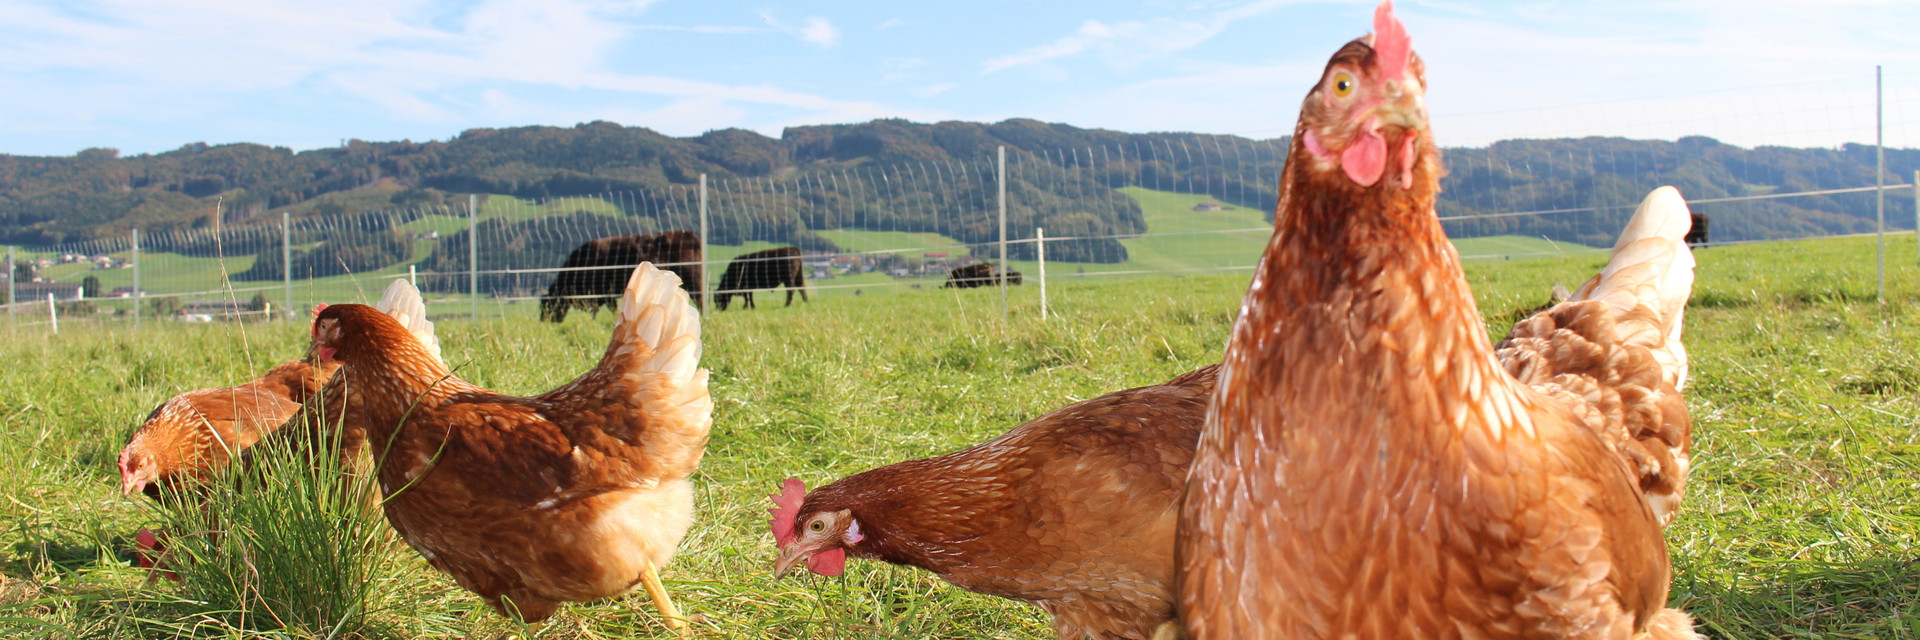 Free-range chickens in a field